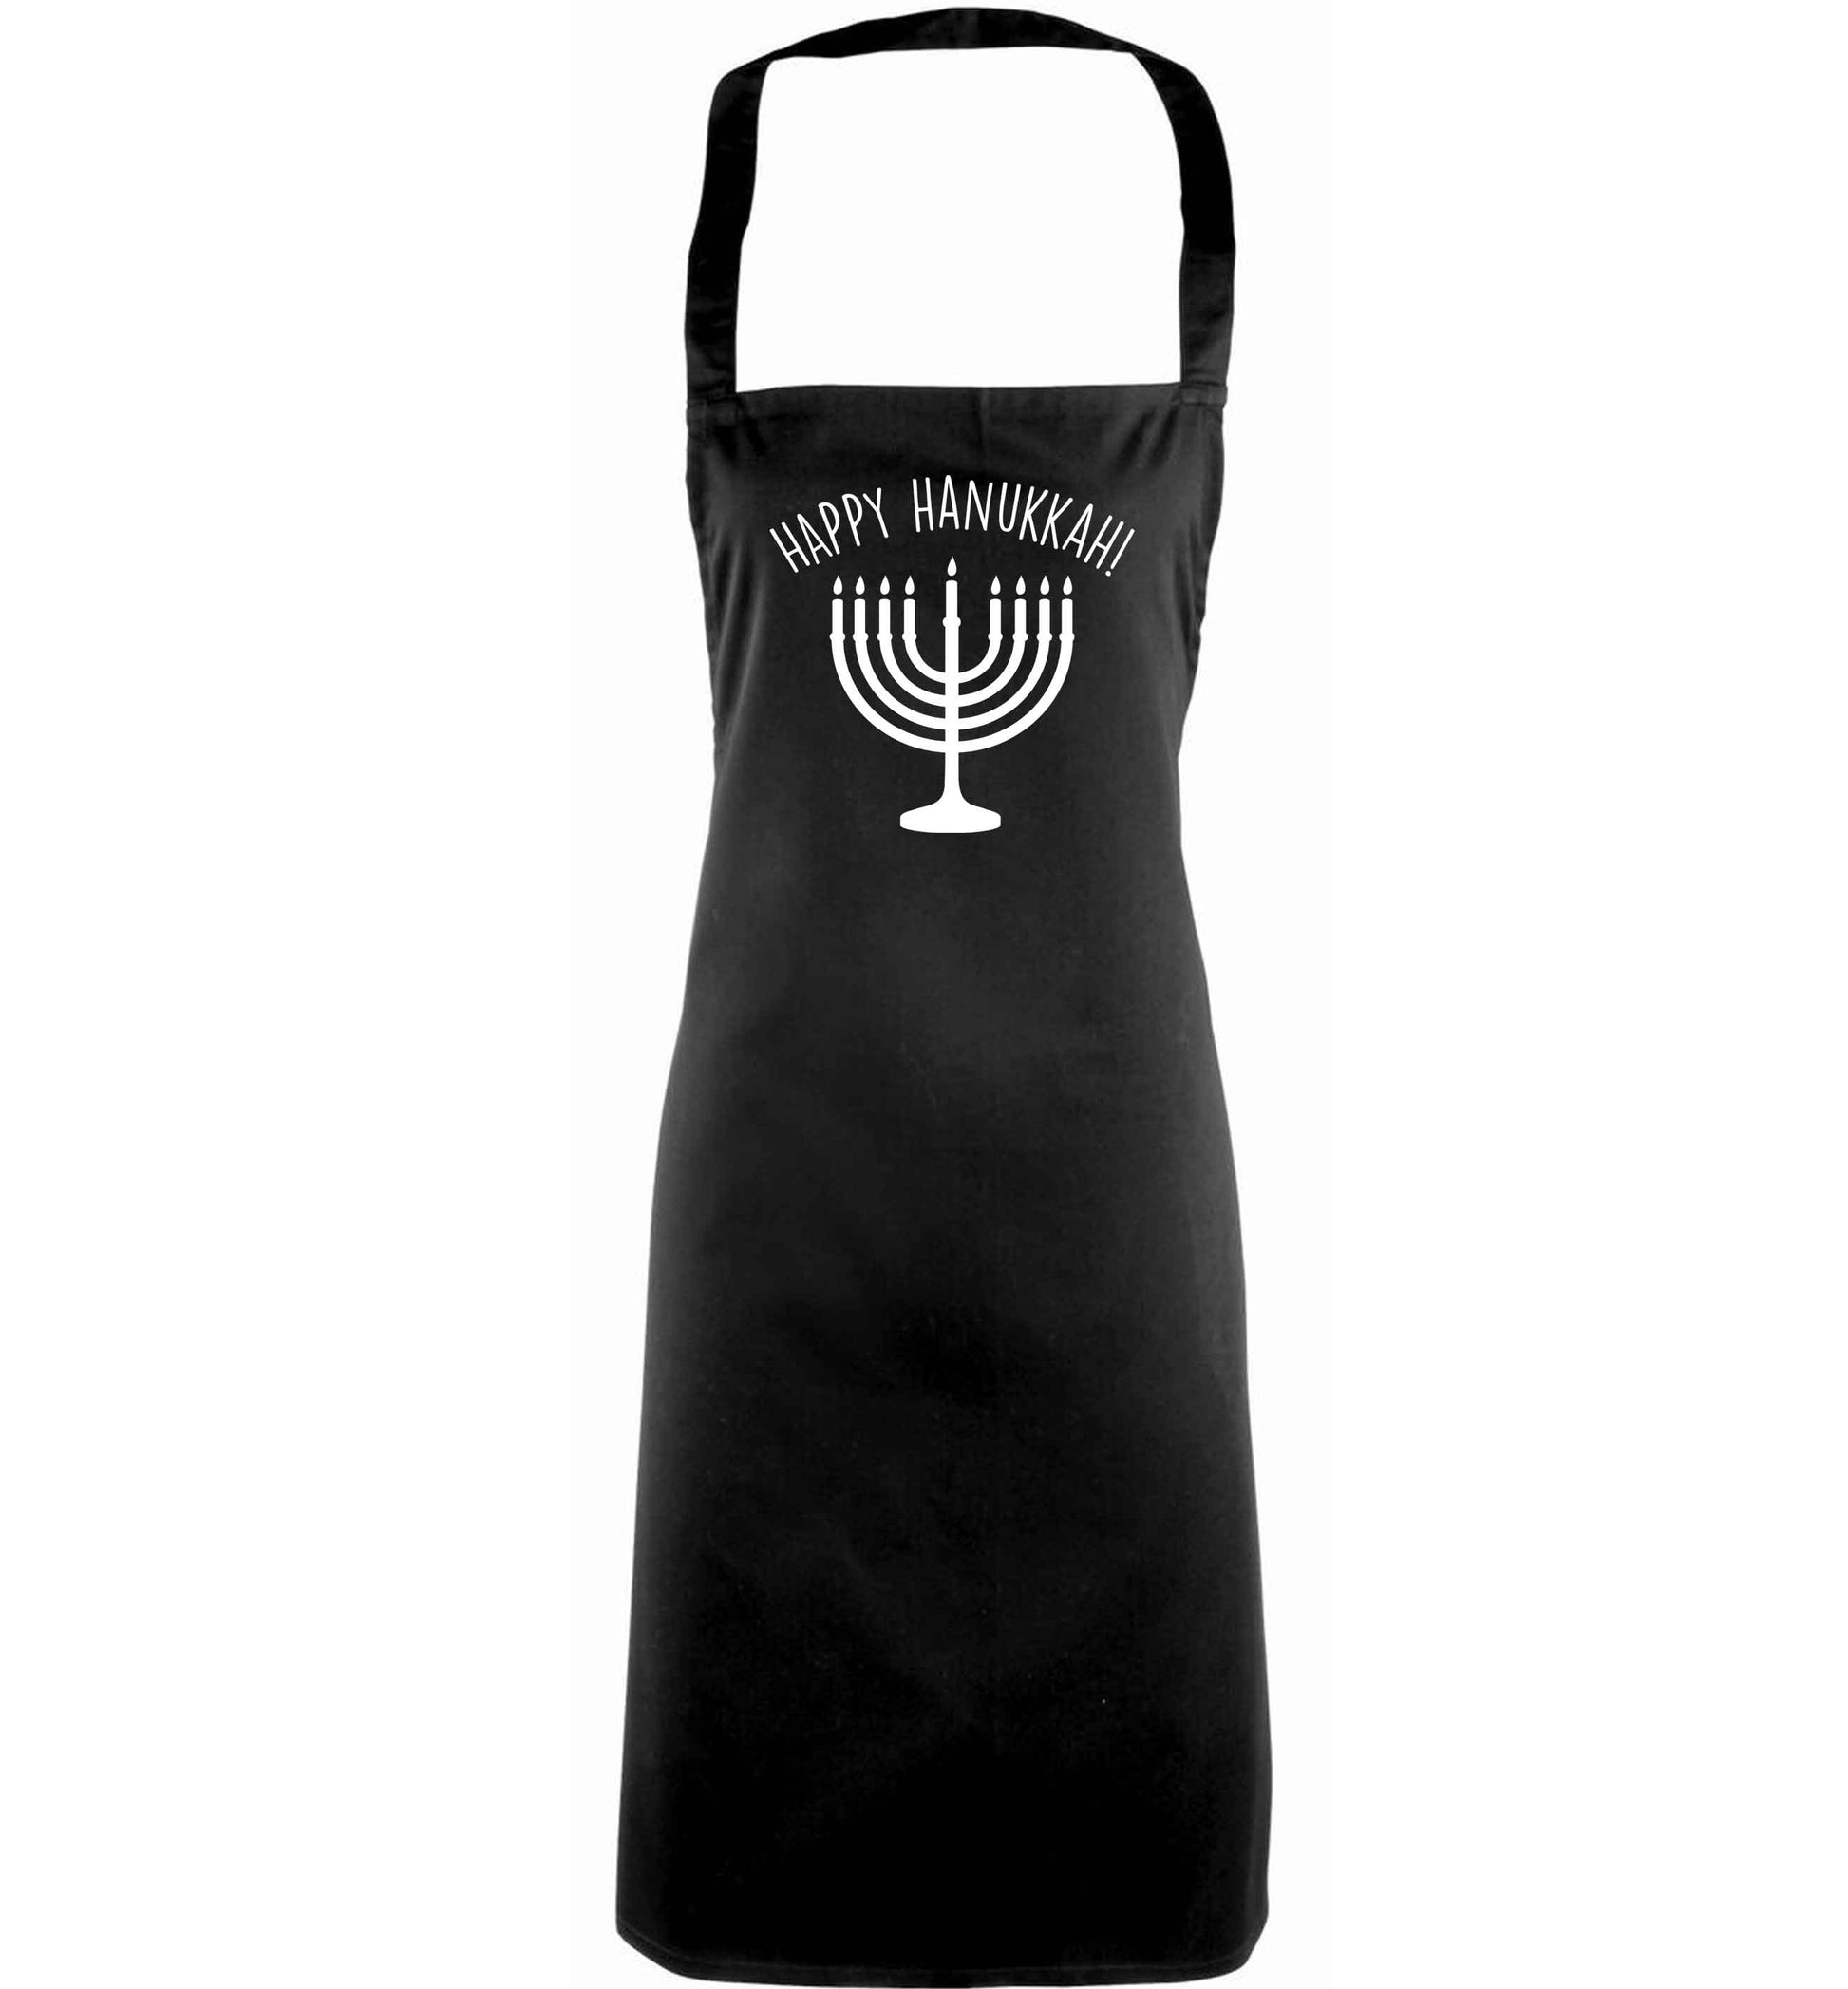 Happy hanukkah adults black apron